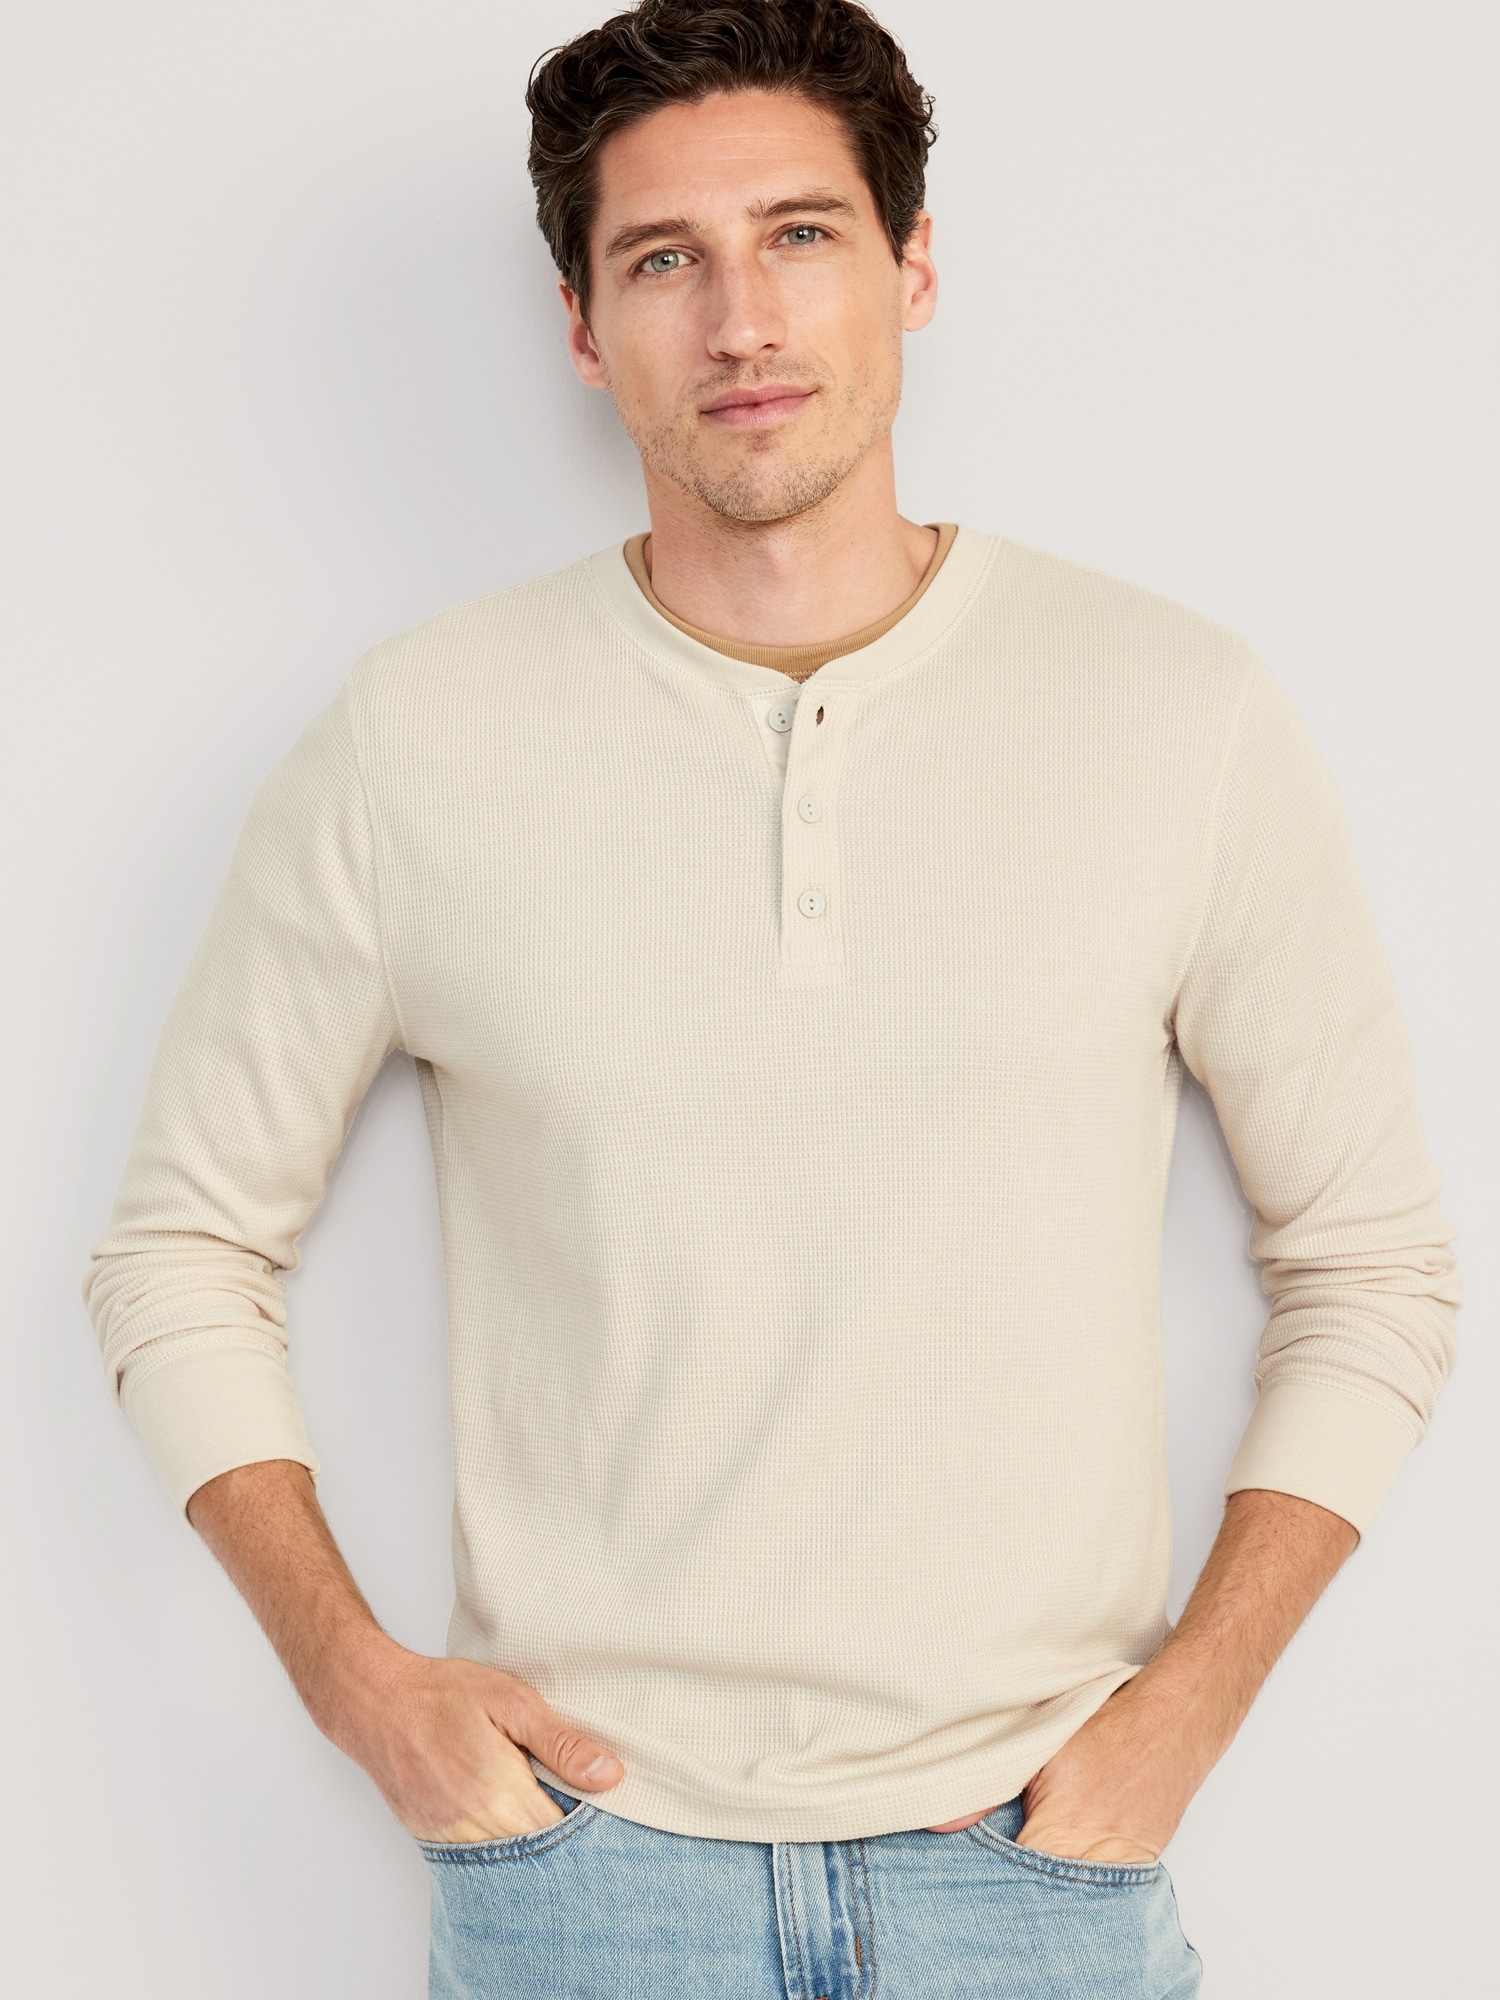 Hollister Henley Shirt Mens Size M Long Sleeve Solid Blue Cotton Large Logo